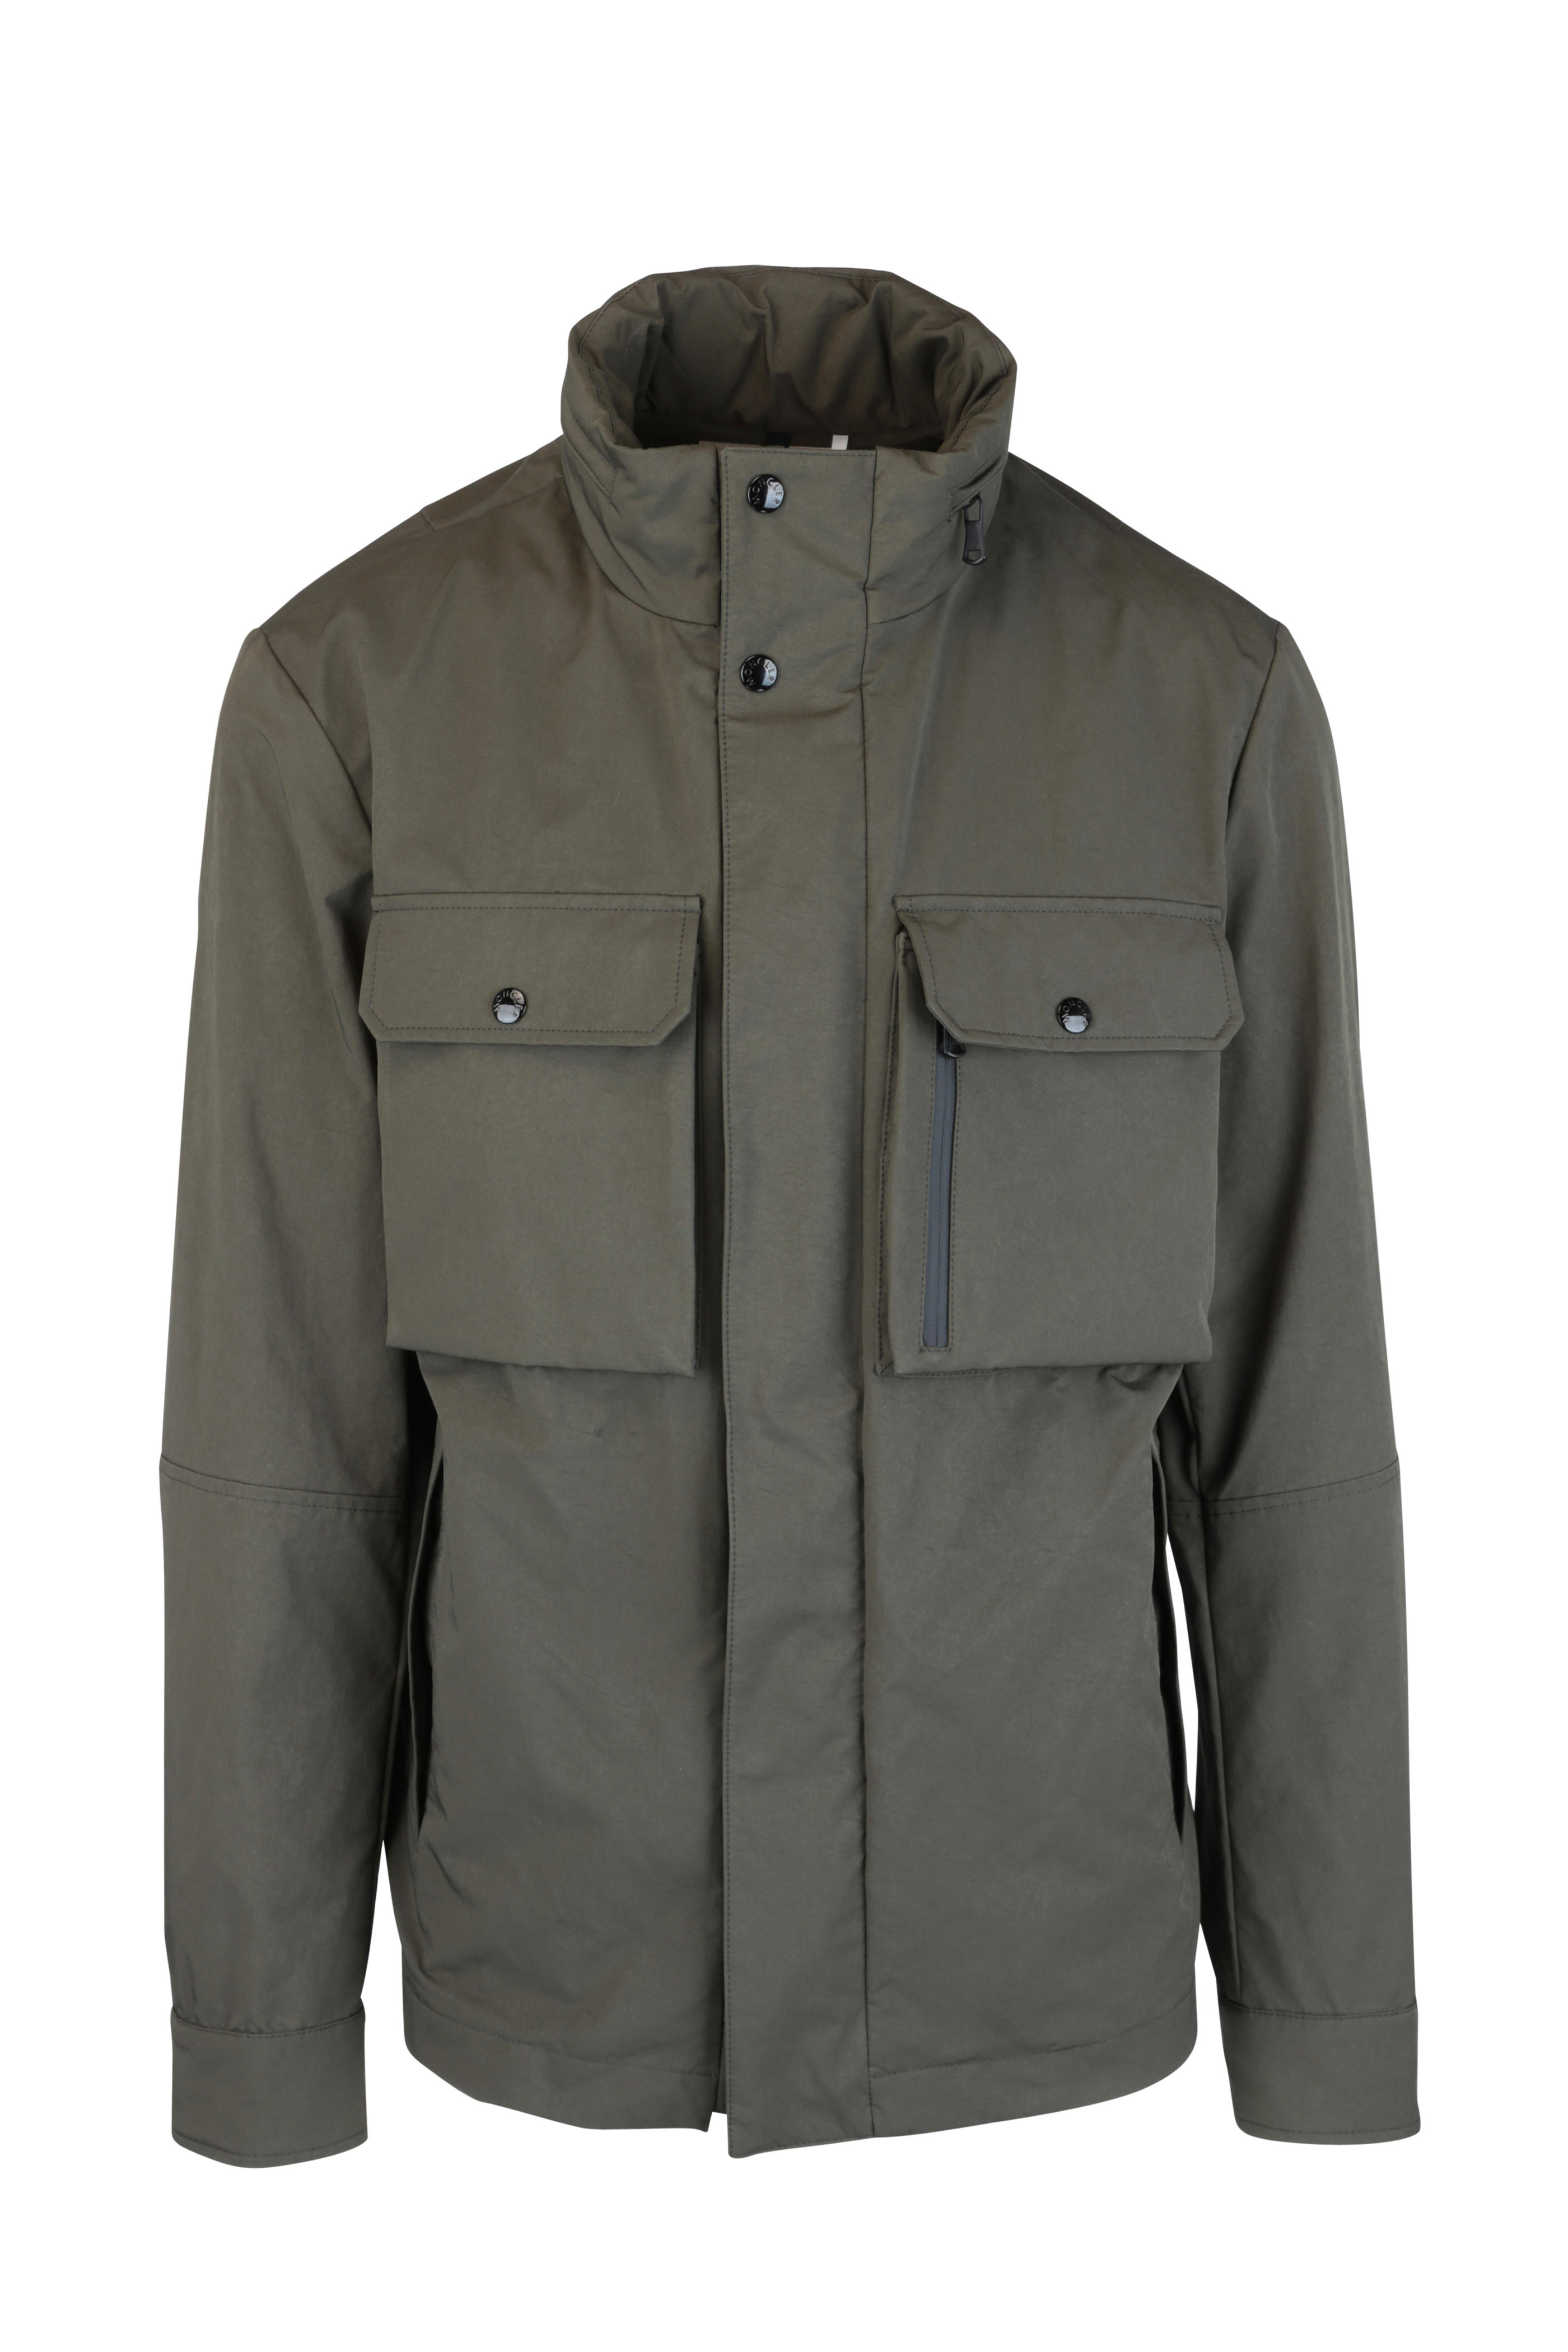 Moncler - Olive Green Field Jacket 